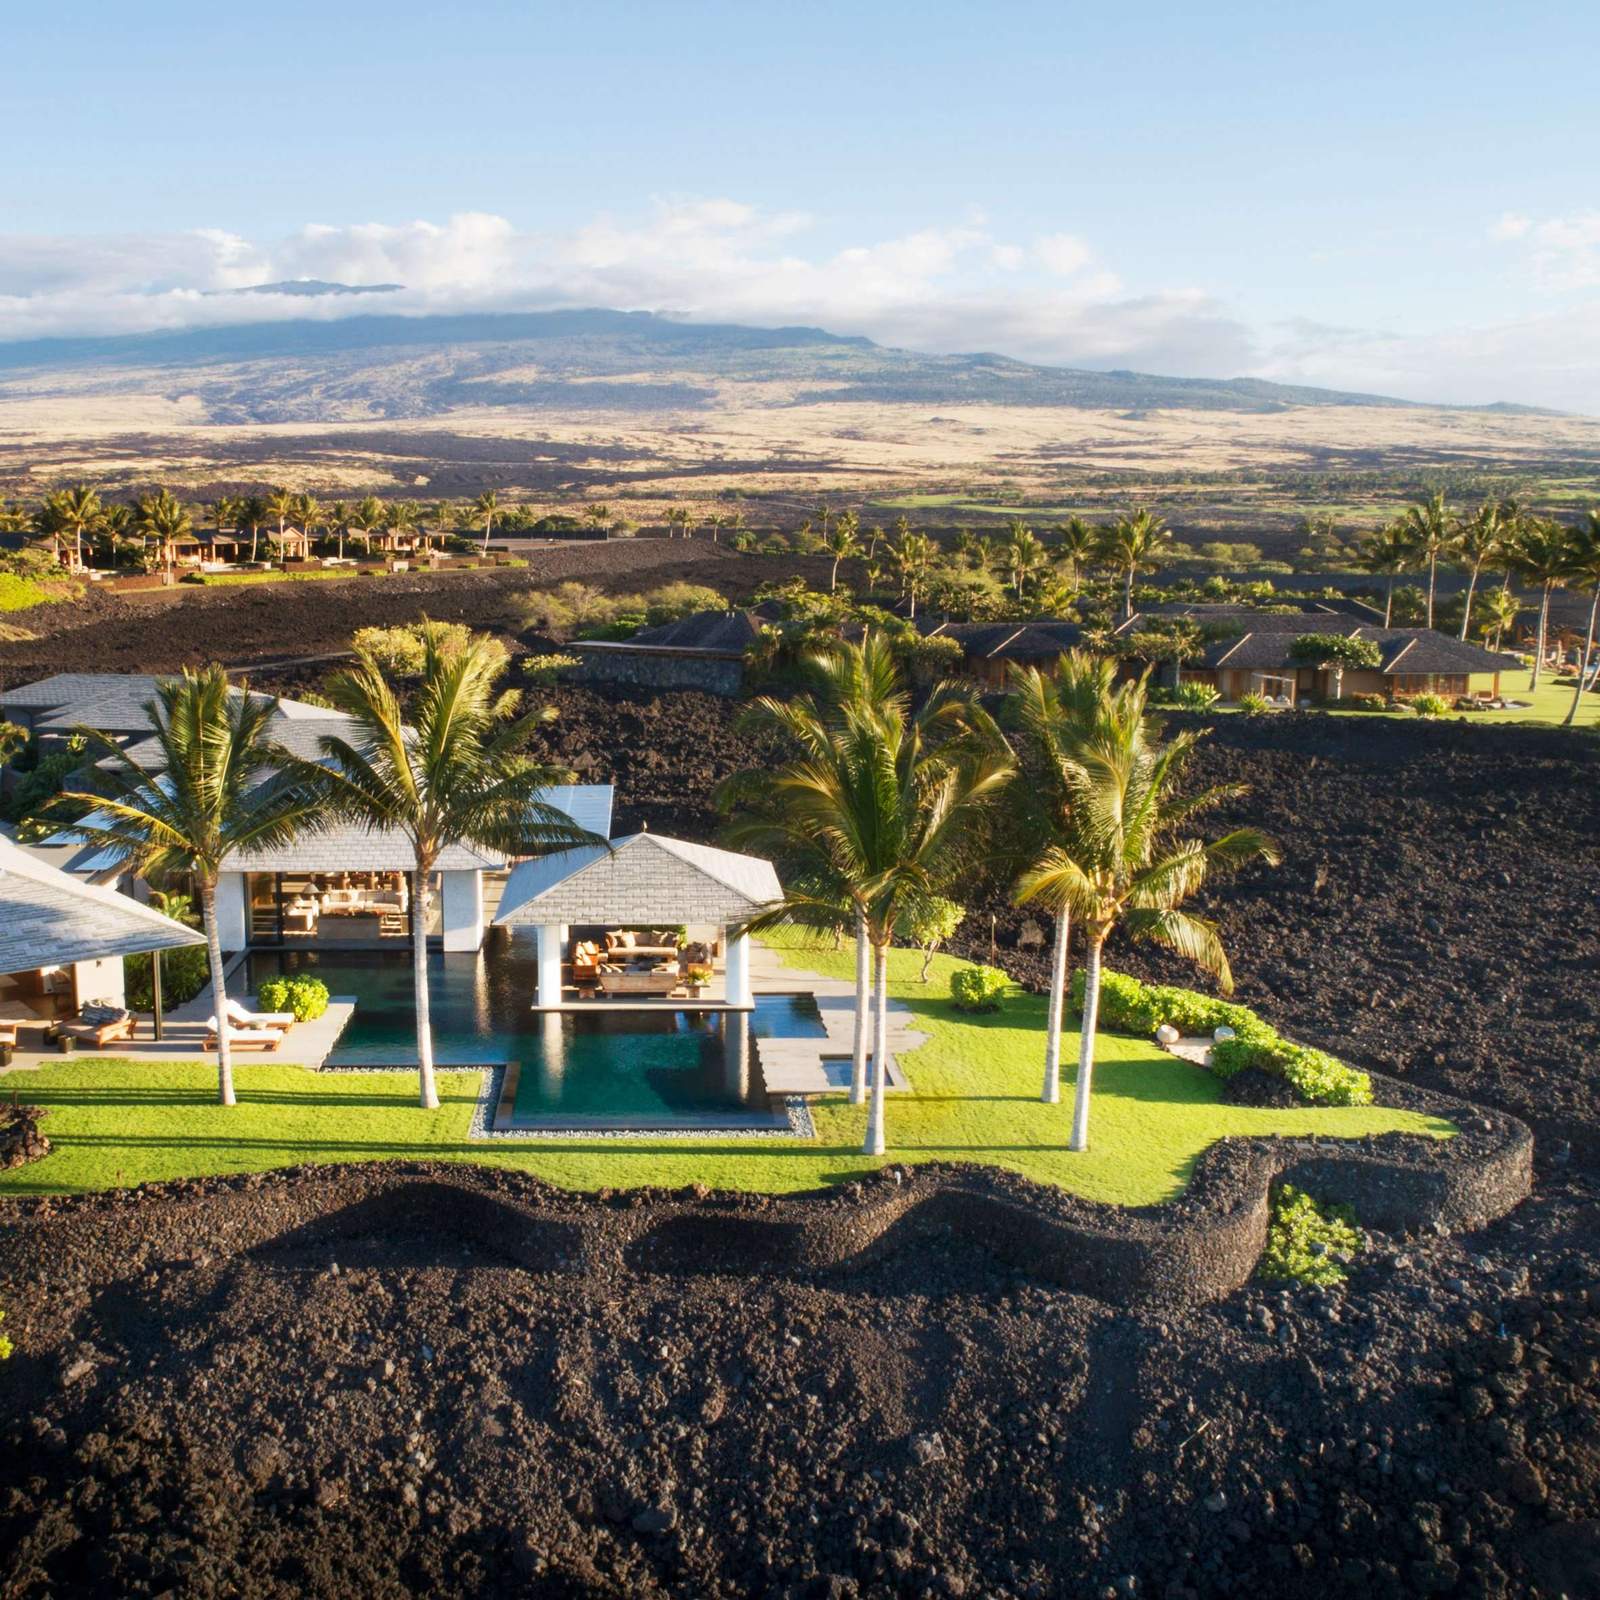 American studio De Reus Architects is constructing a villa on solid lava in Hawaii